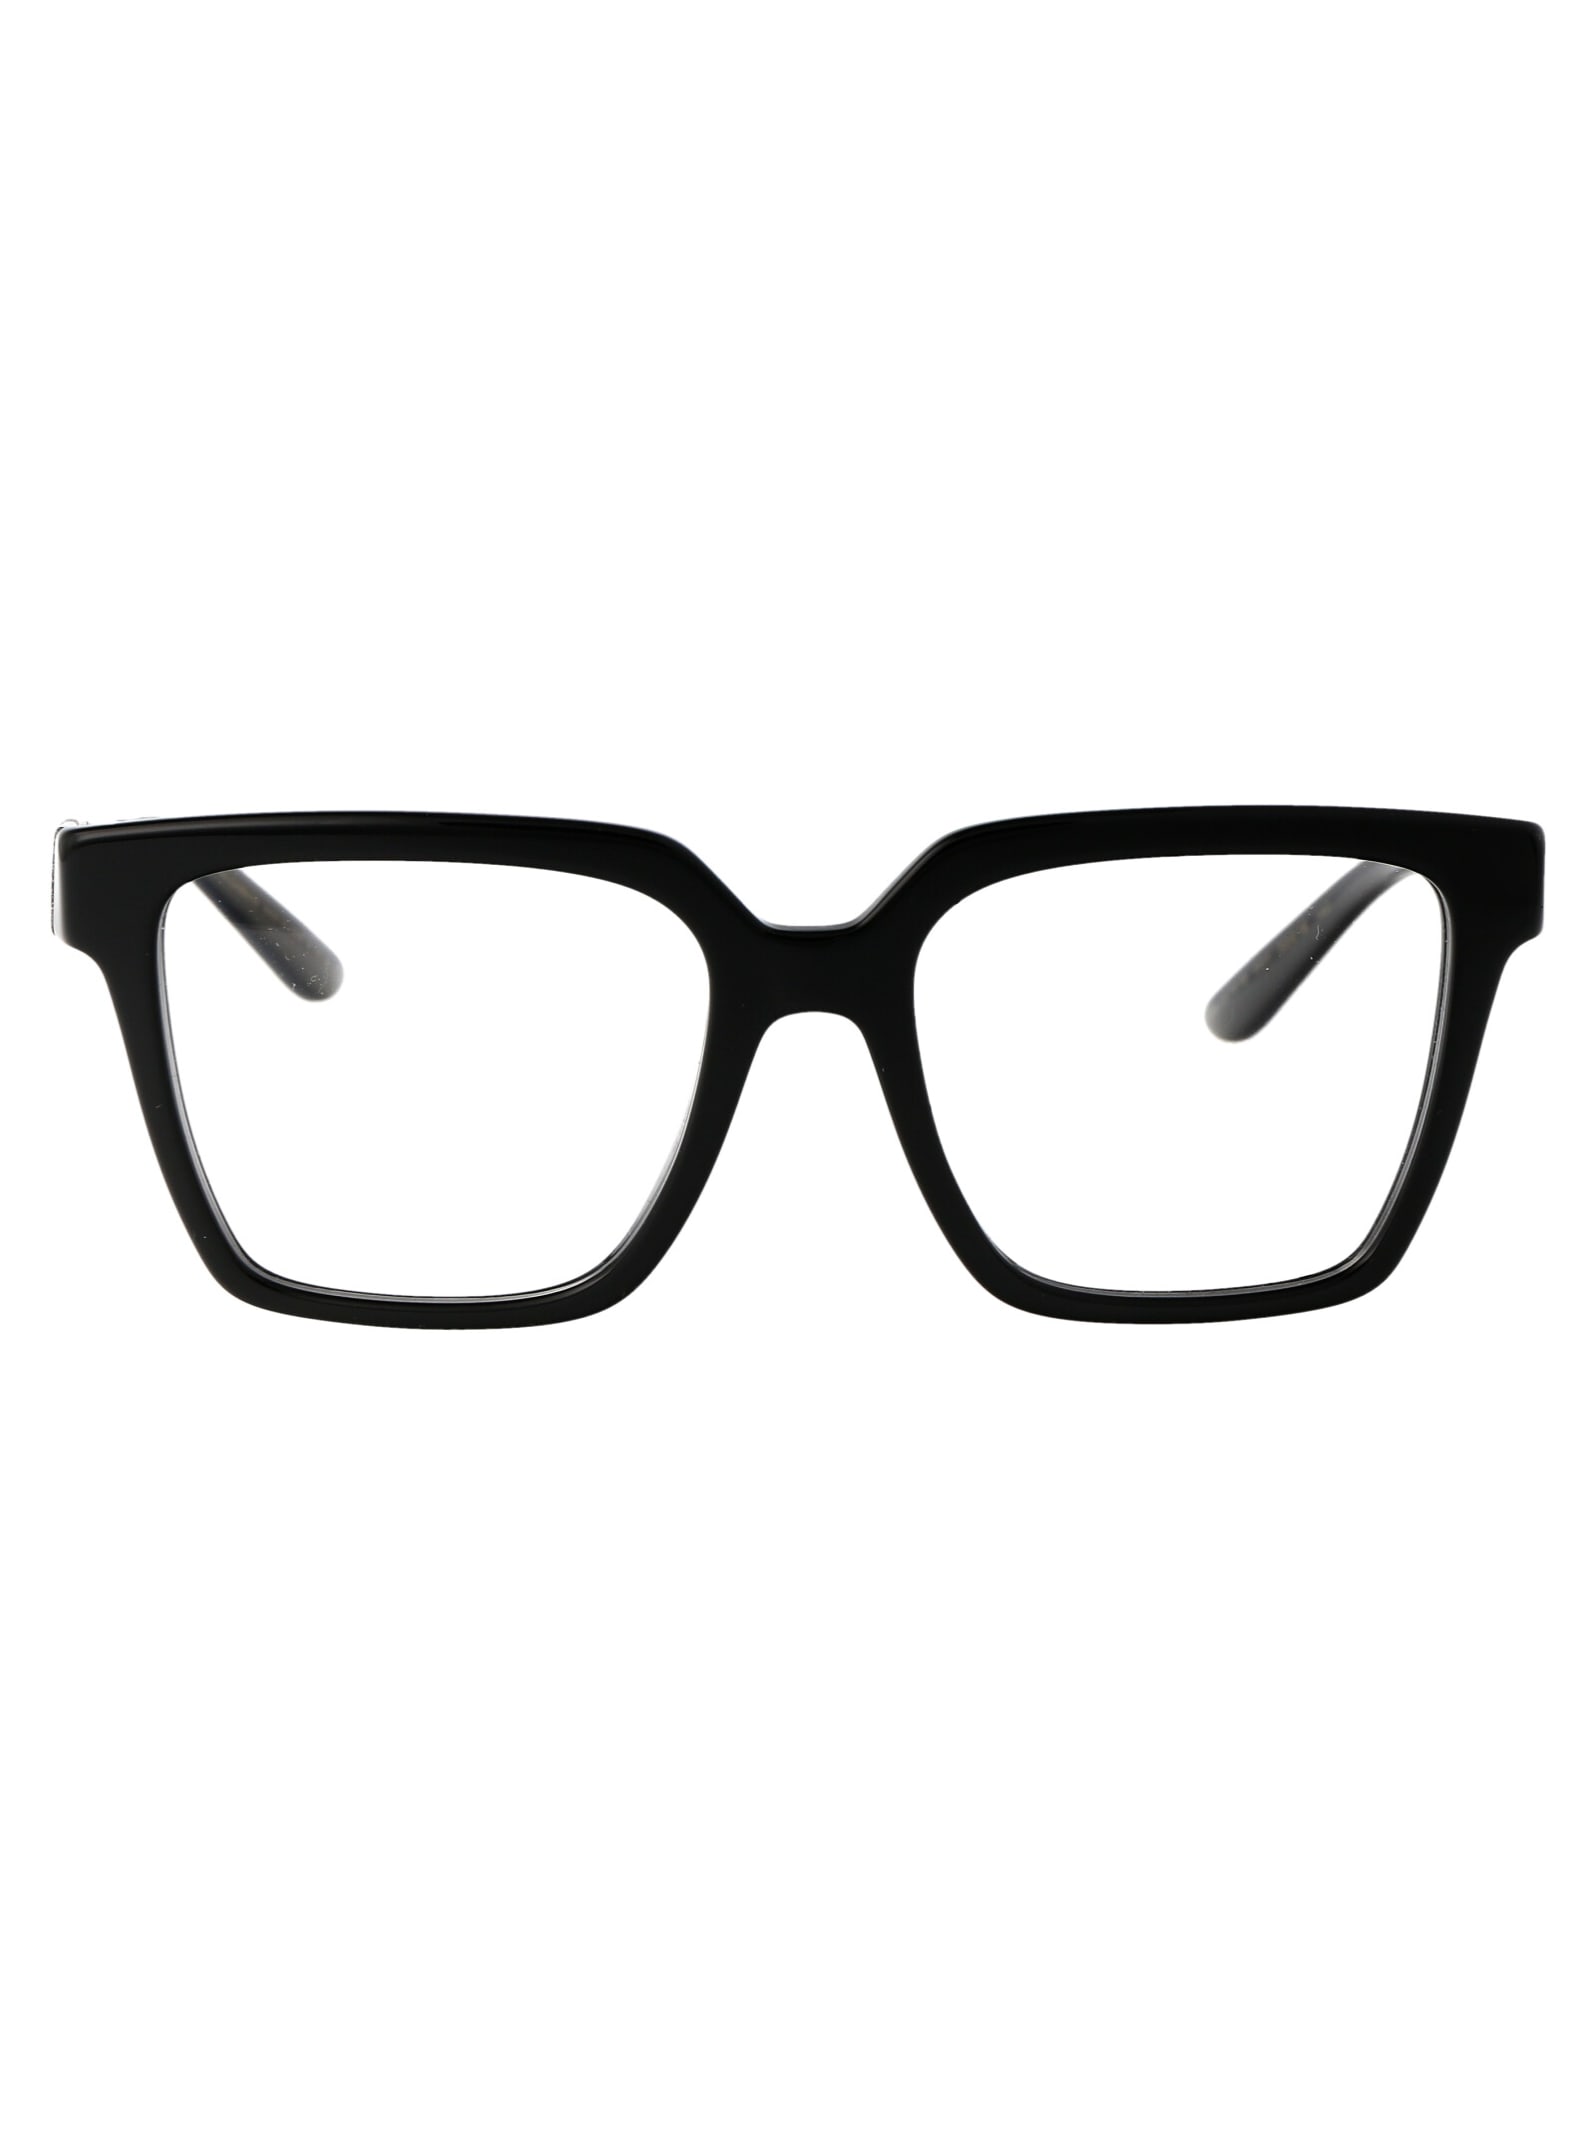 0dg3376b Glasses